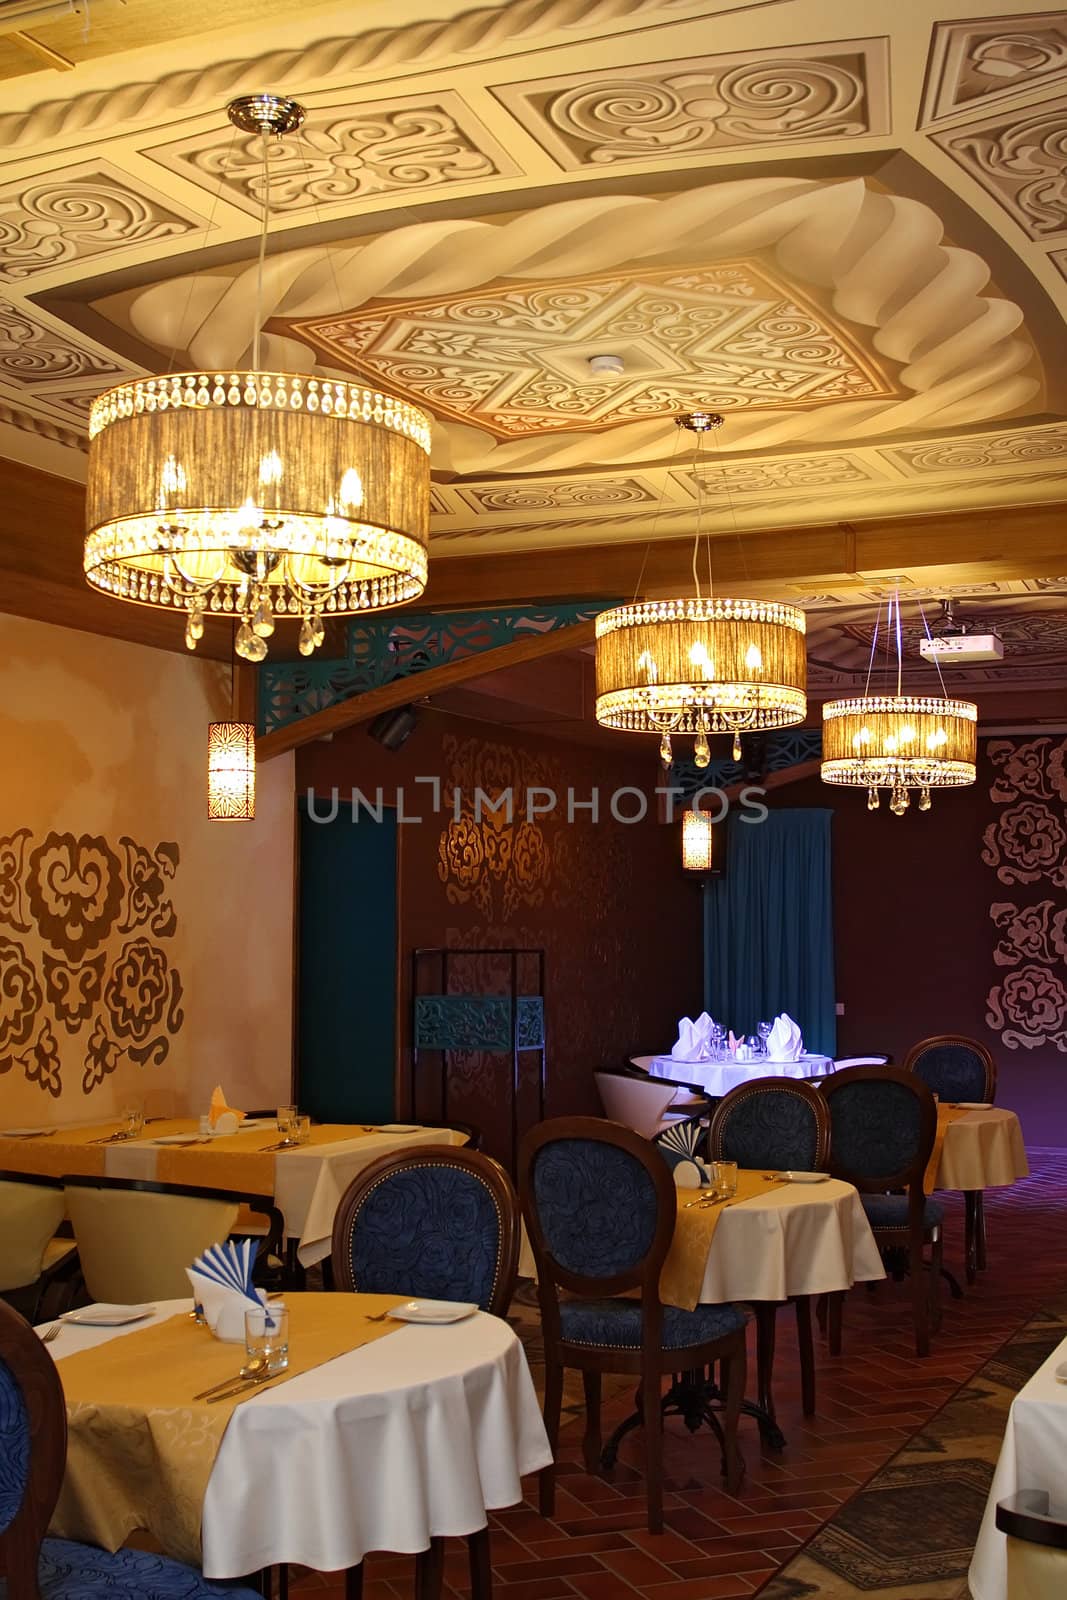 Restaurant interior in east style
